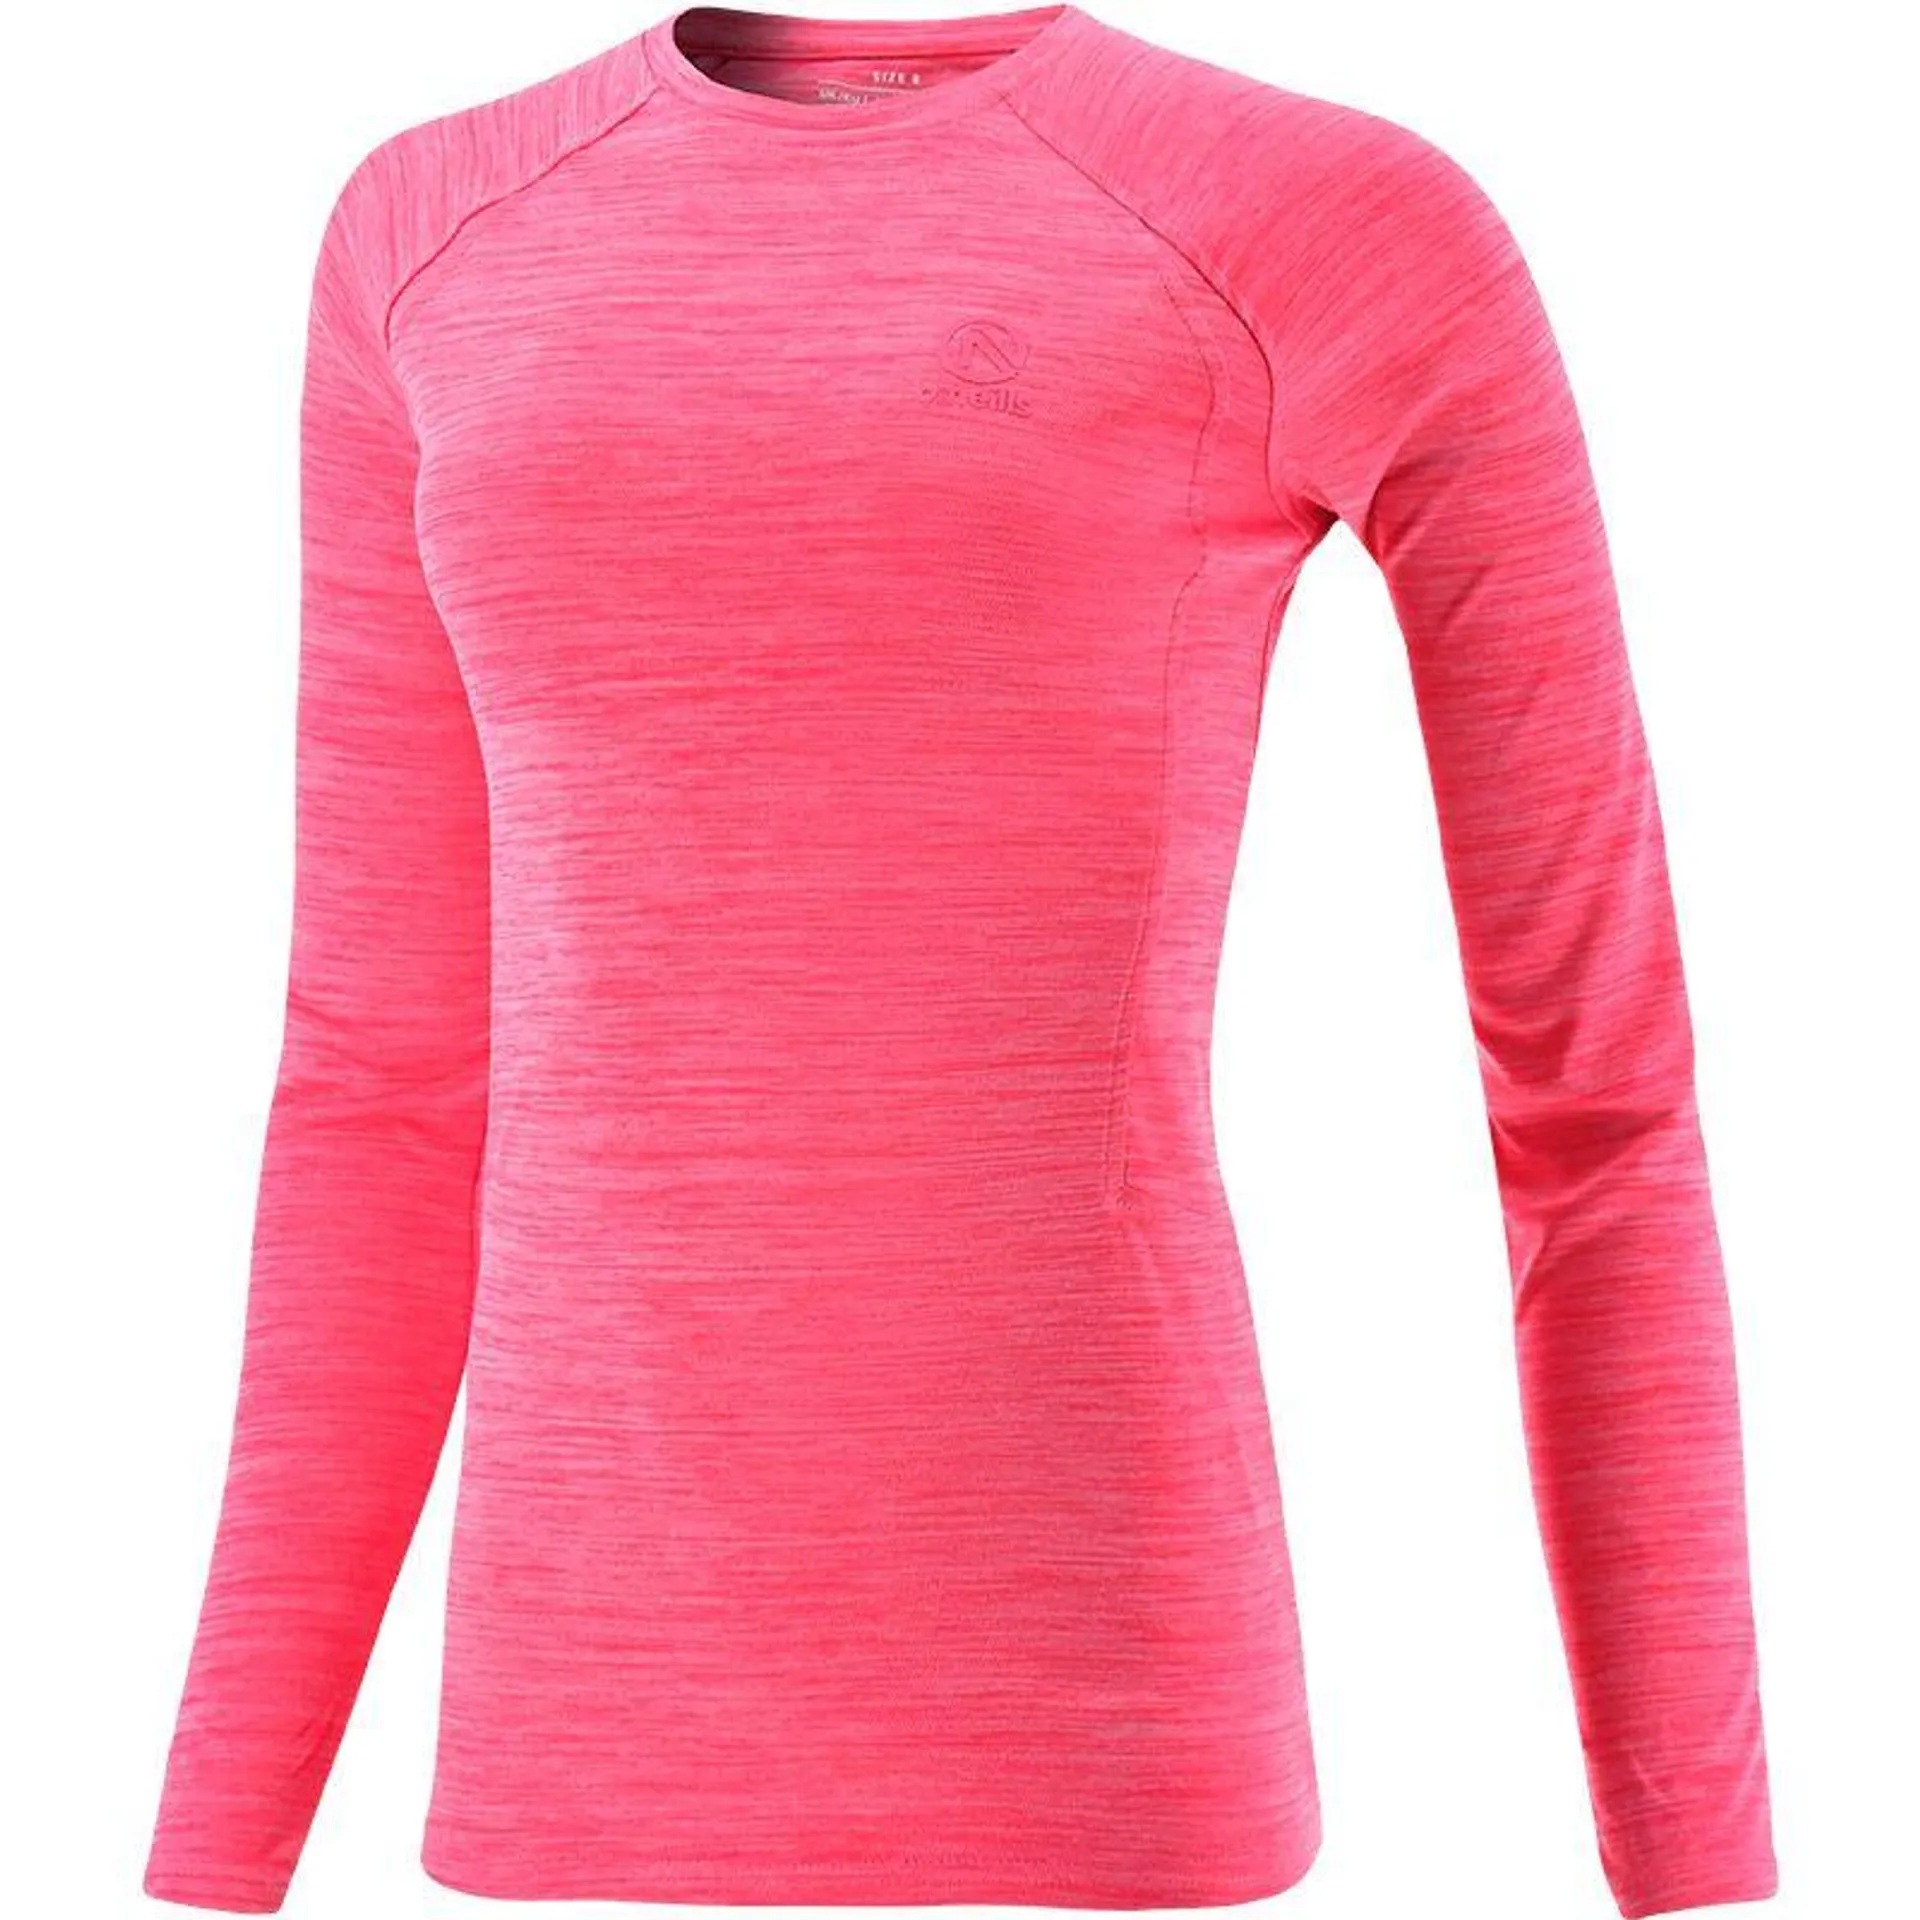 Women's Madison Long Sleeve Top Pink